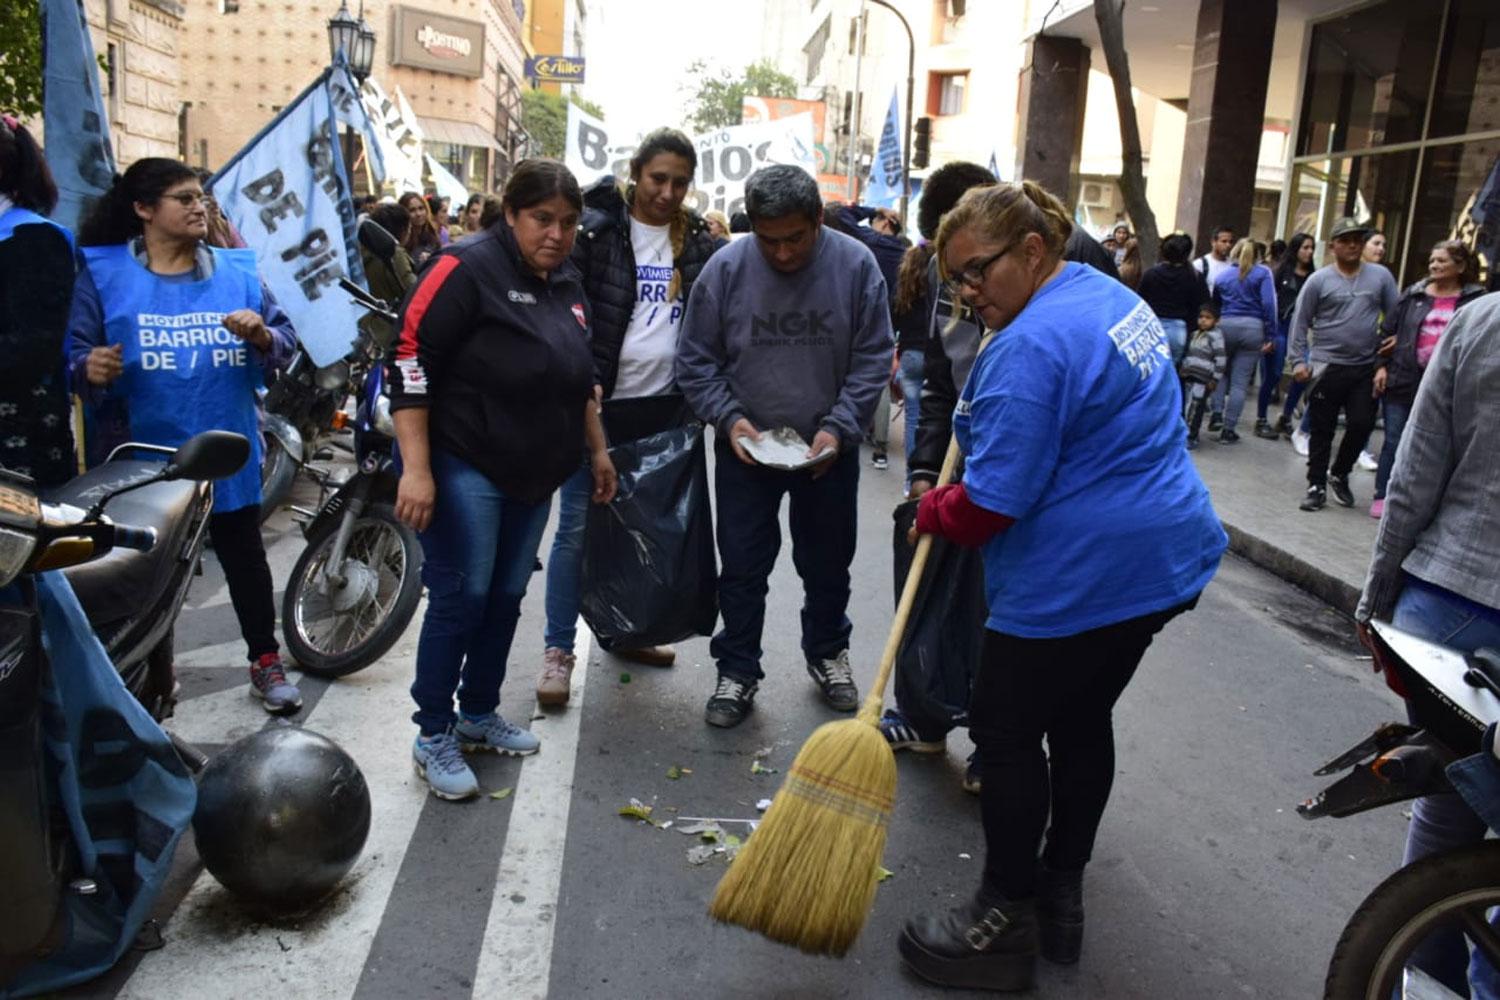 LEVANTARON LA BASURA. Los manifestantes limpiaron la calle al finalizar la protesta.